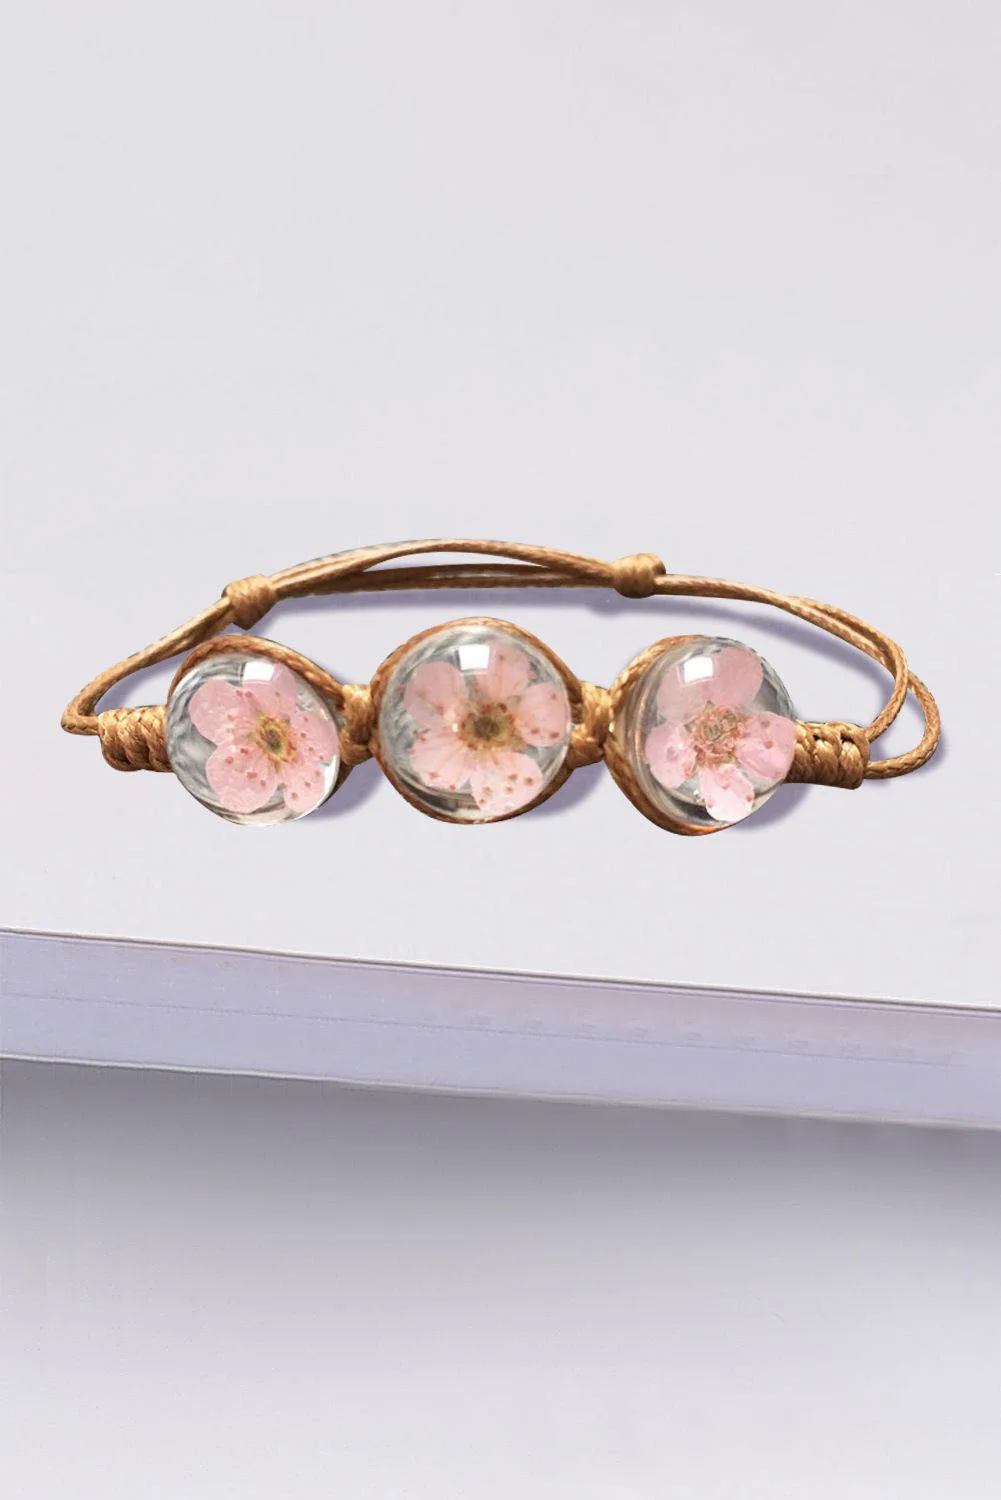 Cherry Blossom Gemstone Glass Adjustable Rope Strand Bangle Bracelet